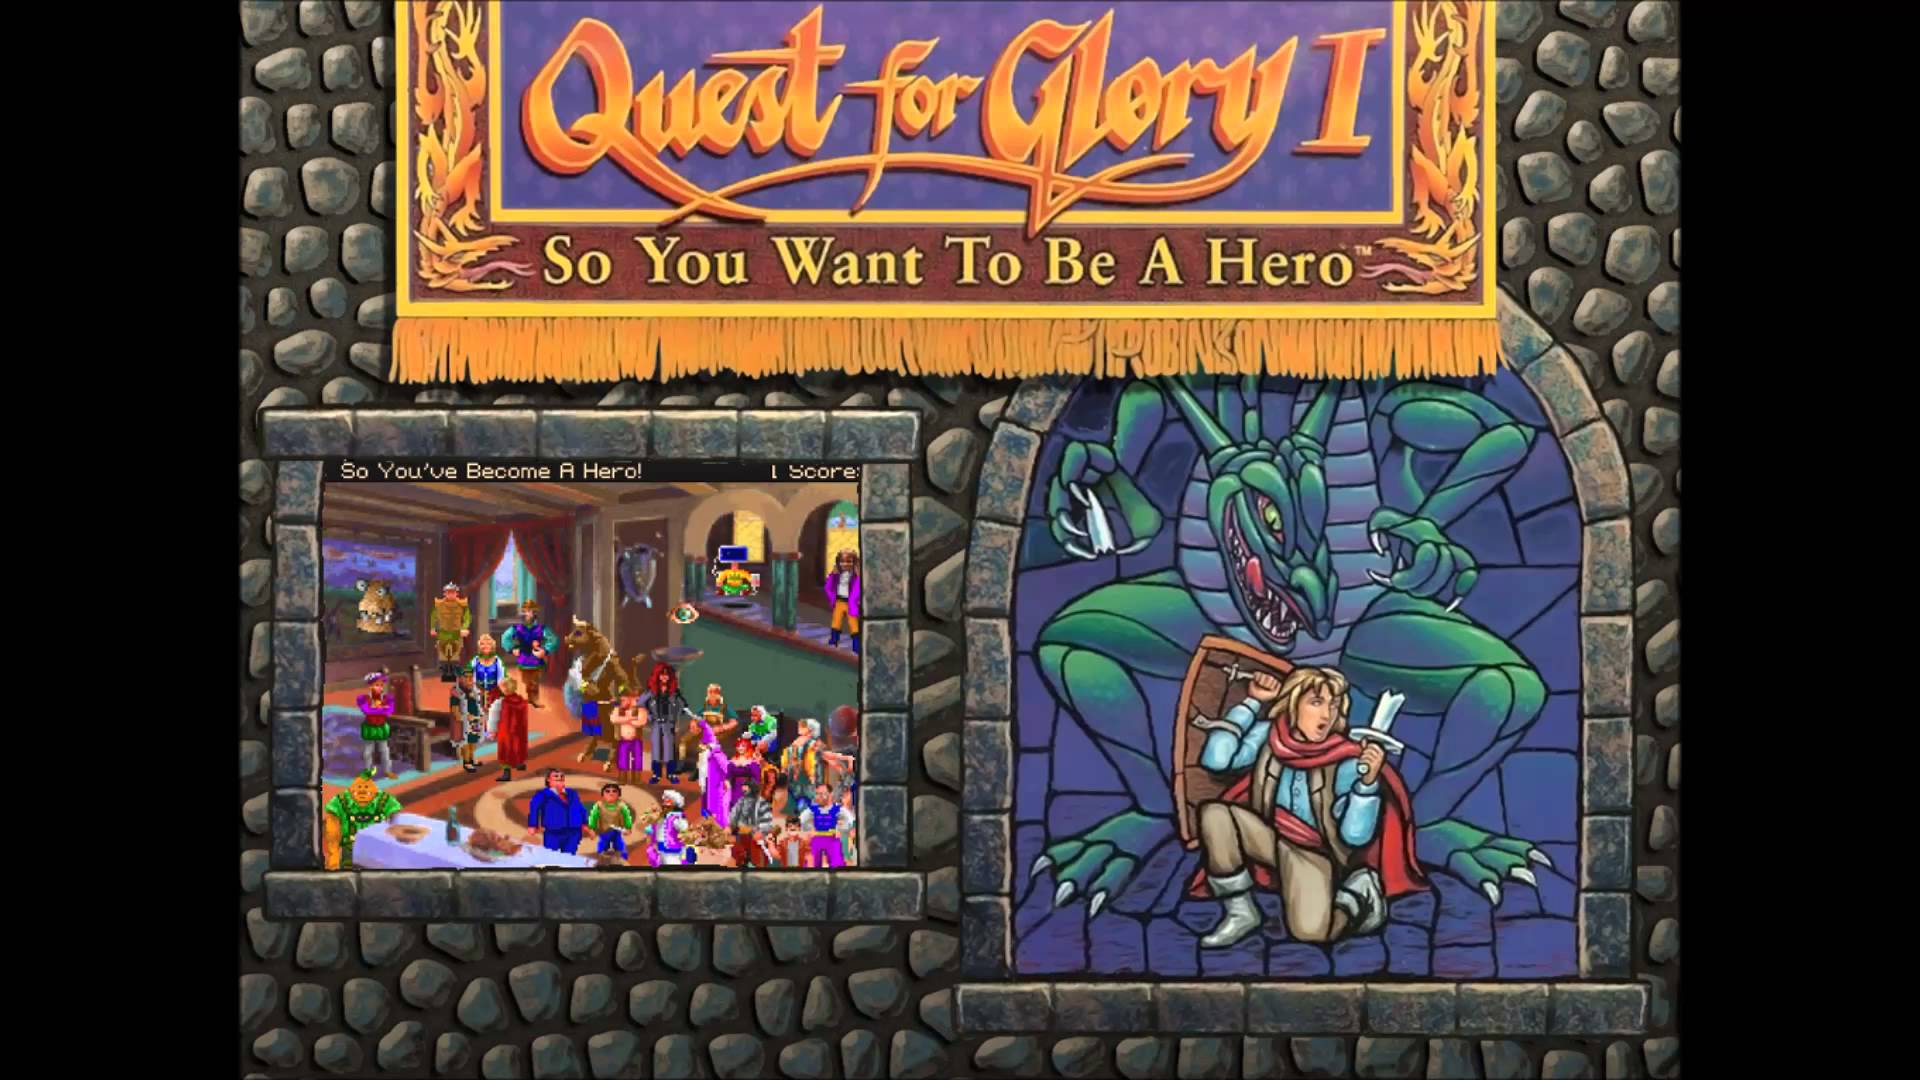 Quest-for-Glory-wallpaper-2.jpg